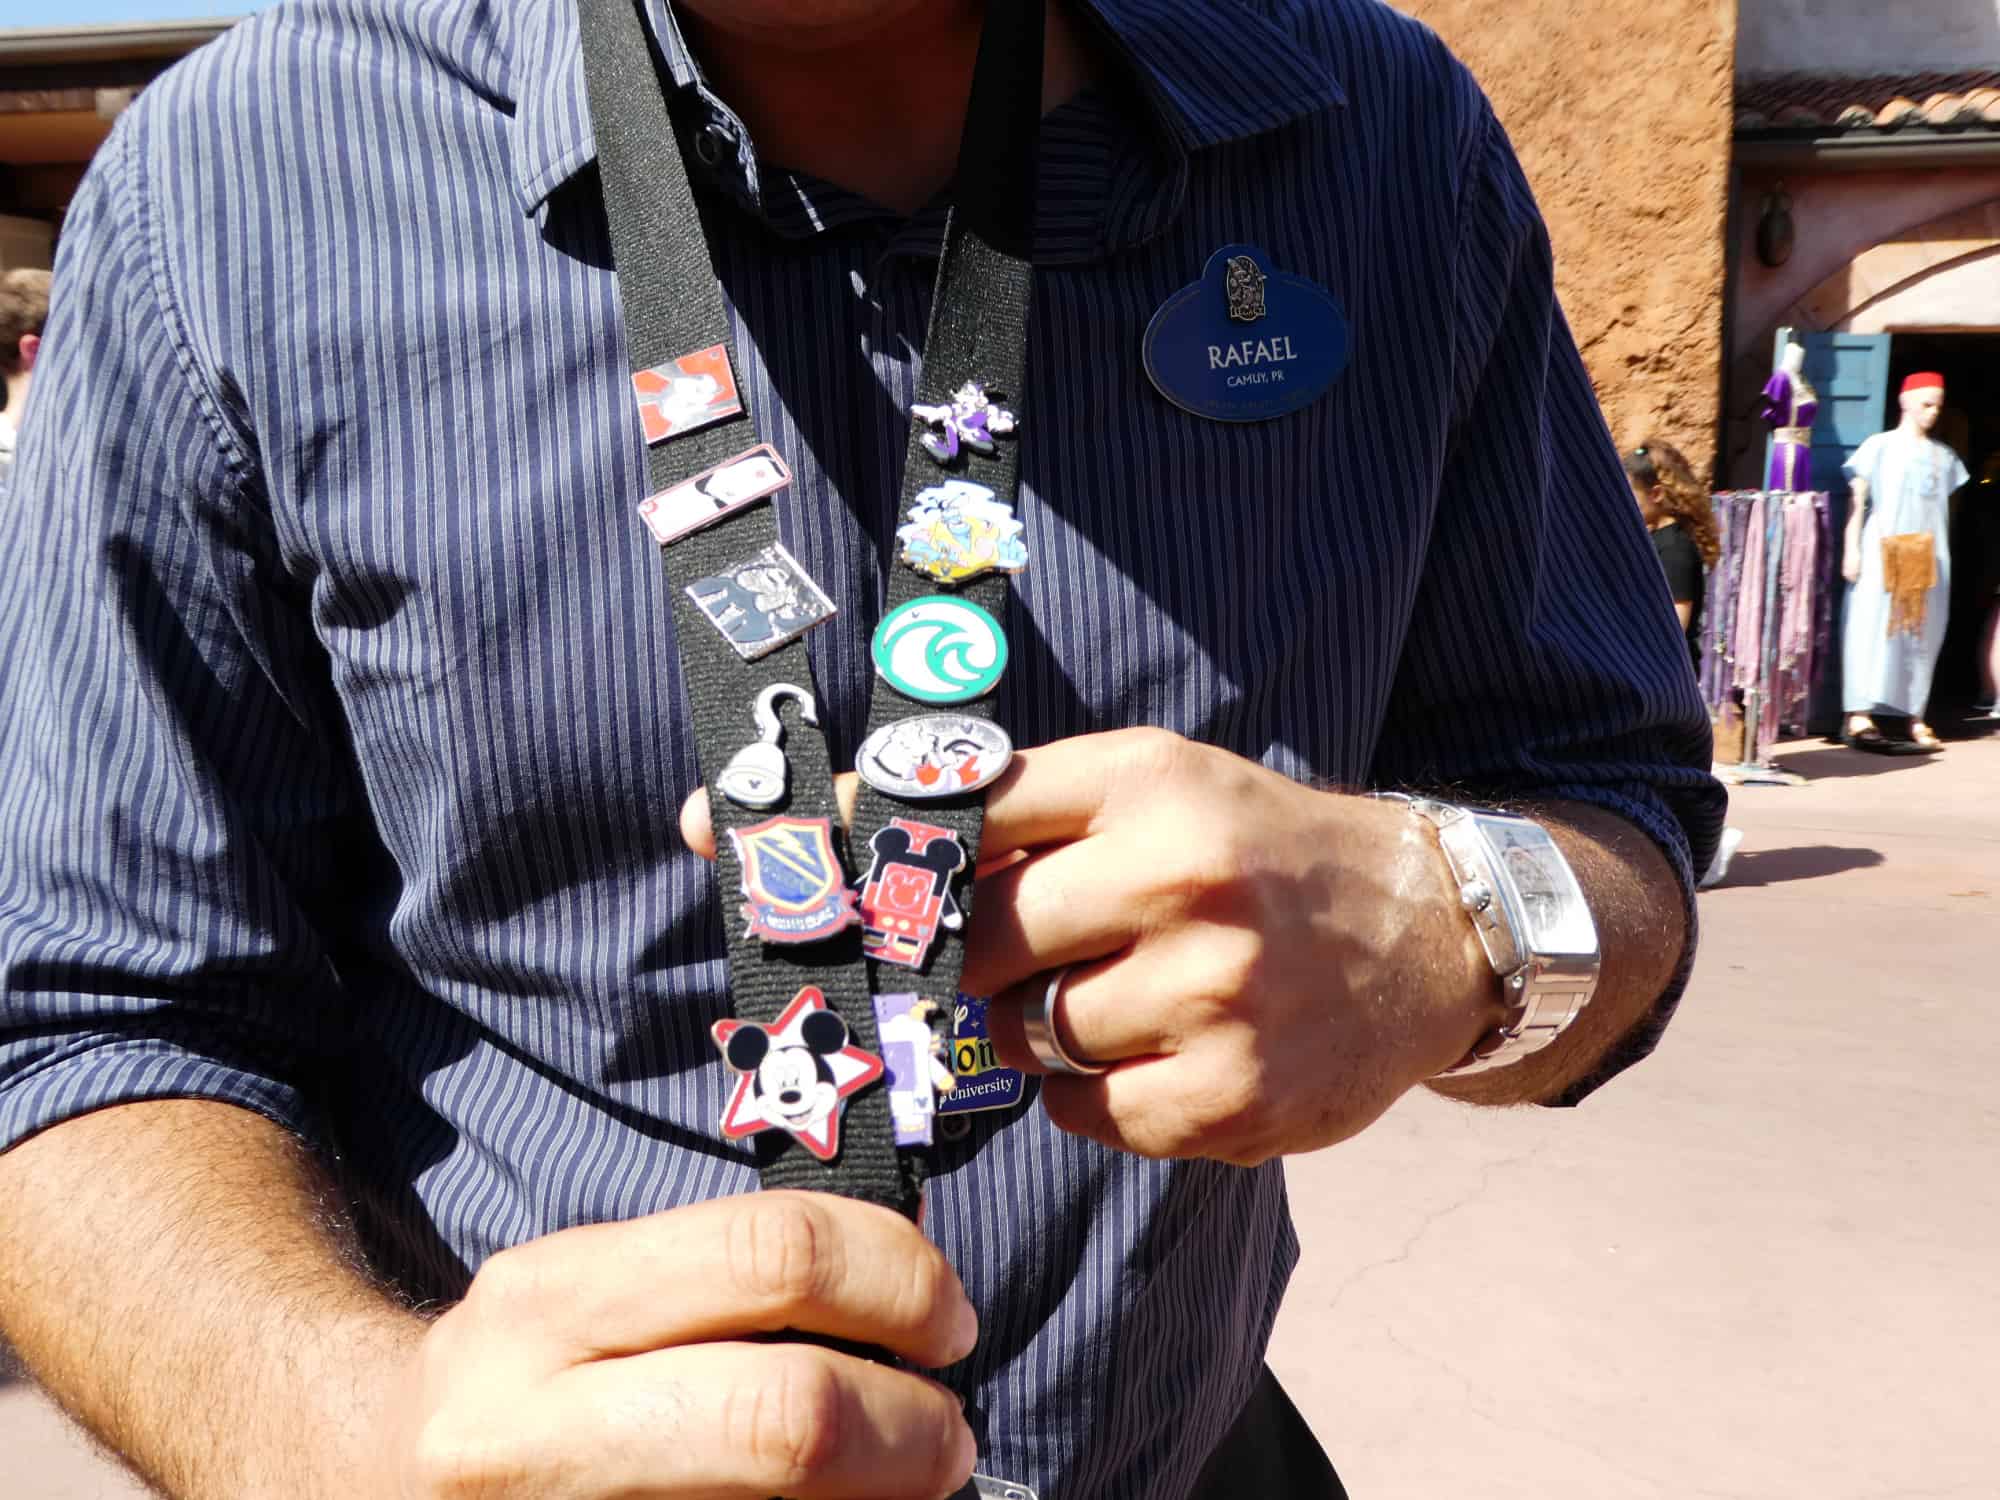 Beginner's Guide To Pin Trading at Disney World: Disney Pin